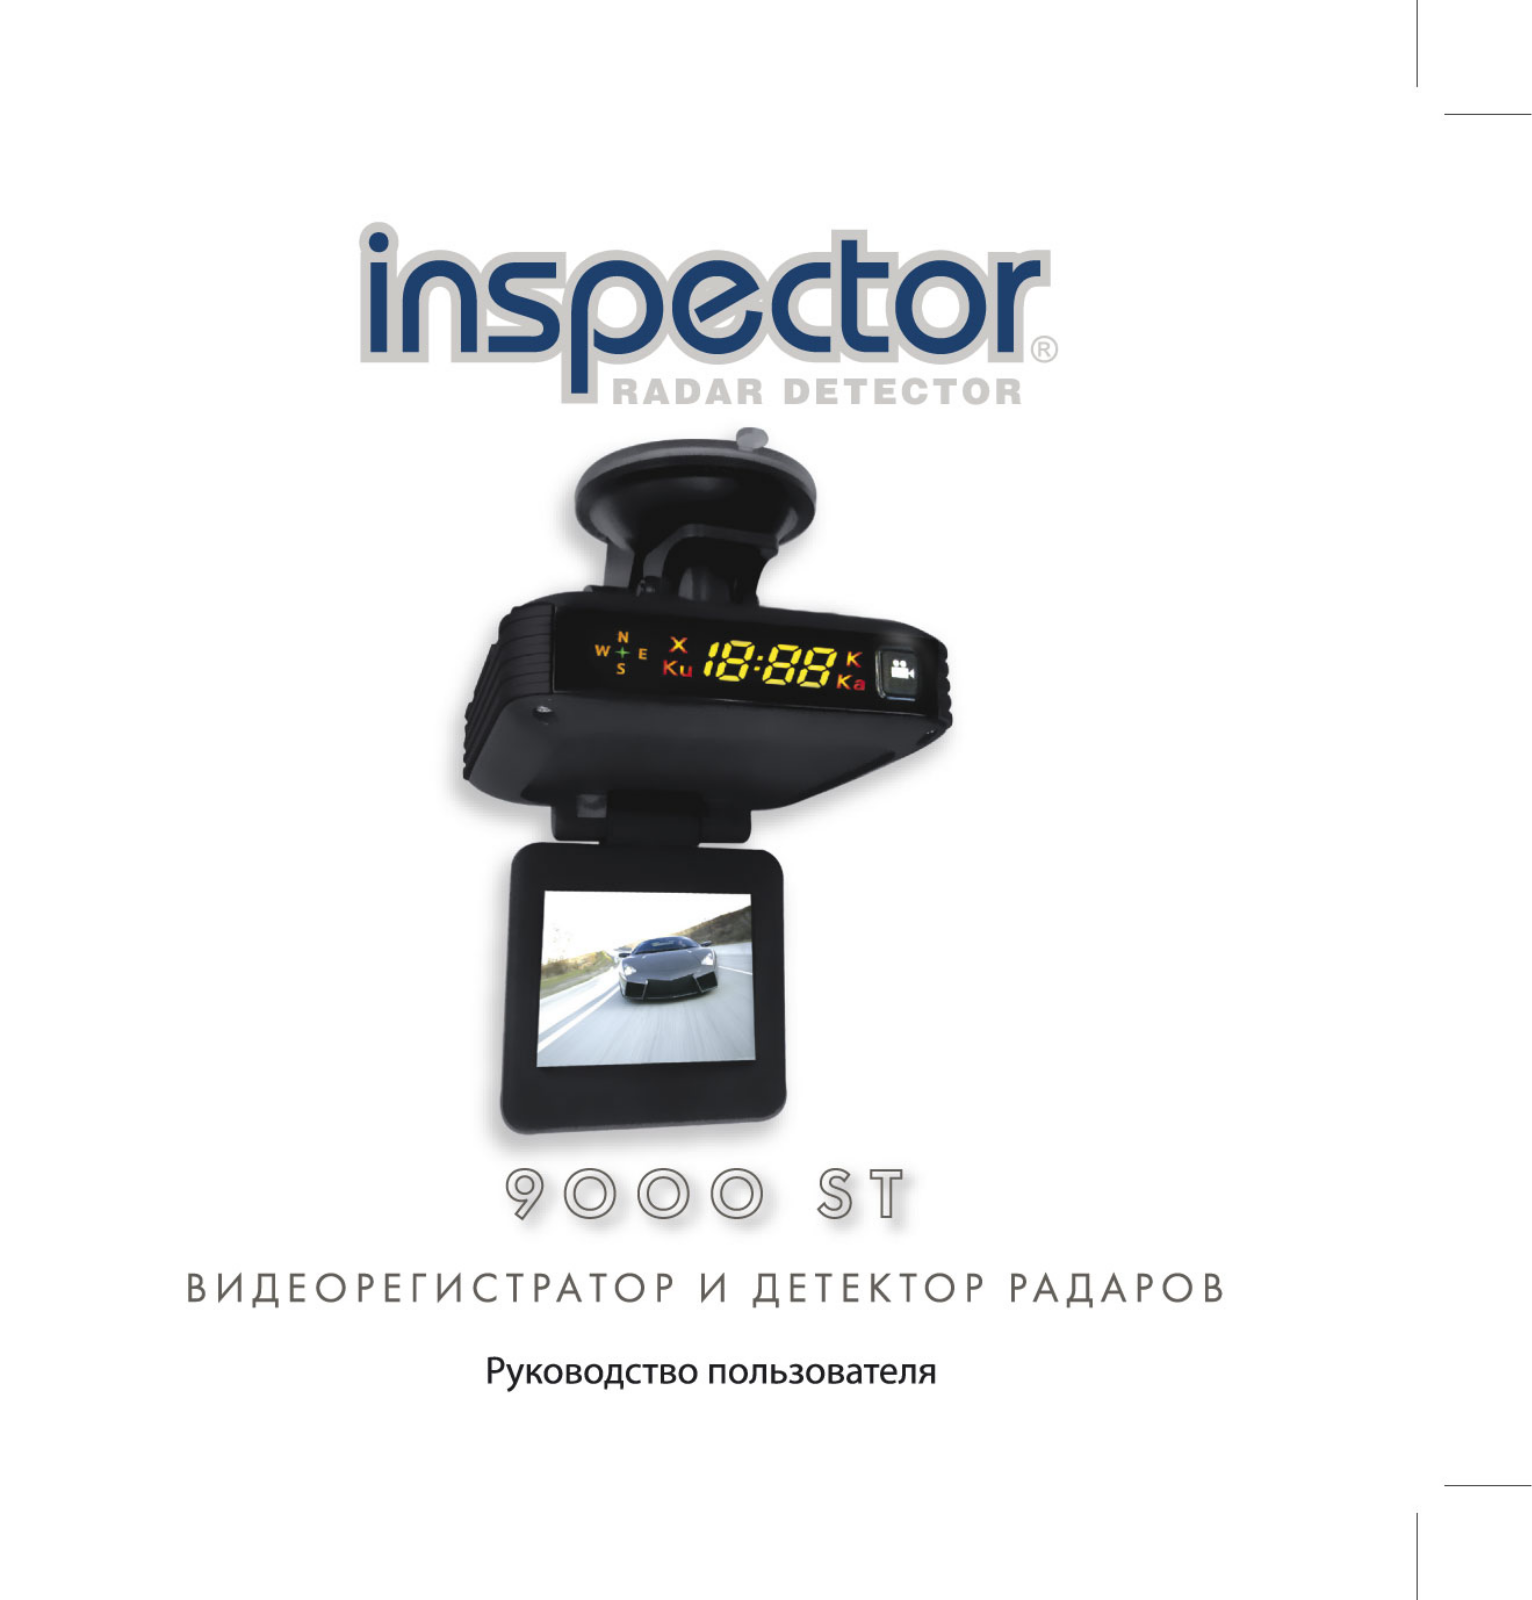 Inspector 9000ST User Manual